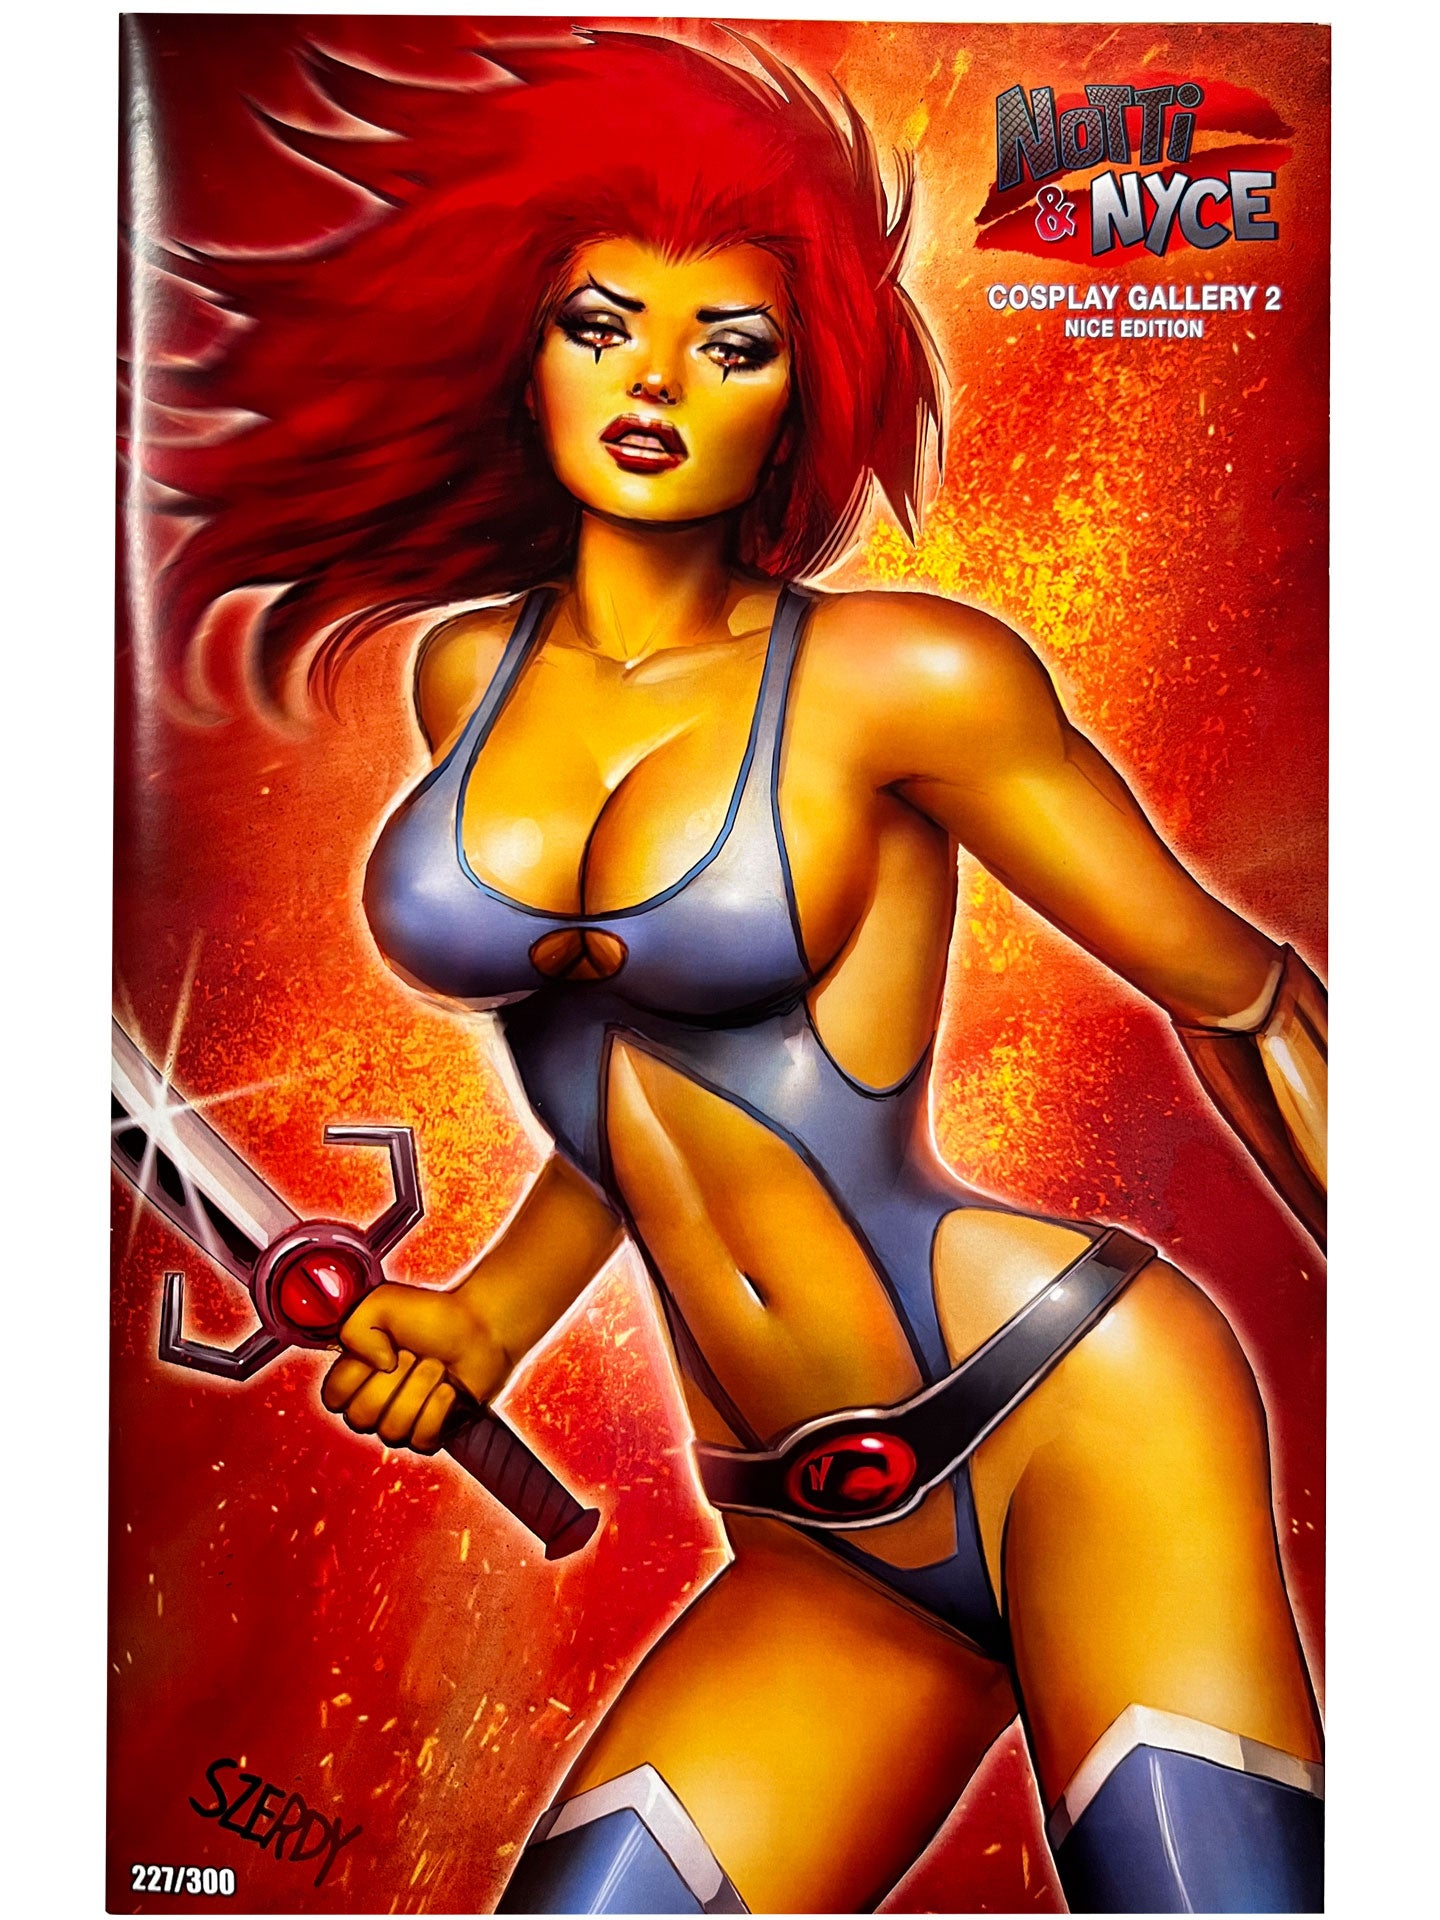 Notti & Nyce Cosplay Gallery #2 Nice Edition Szerdy Thundercats Lion-O –  Chrizm Comics & Collectibles